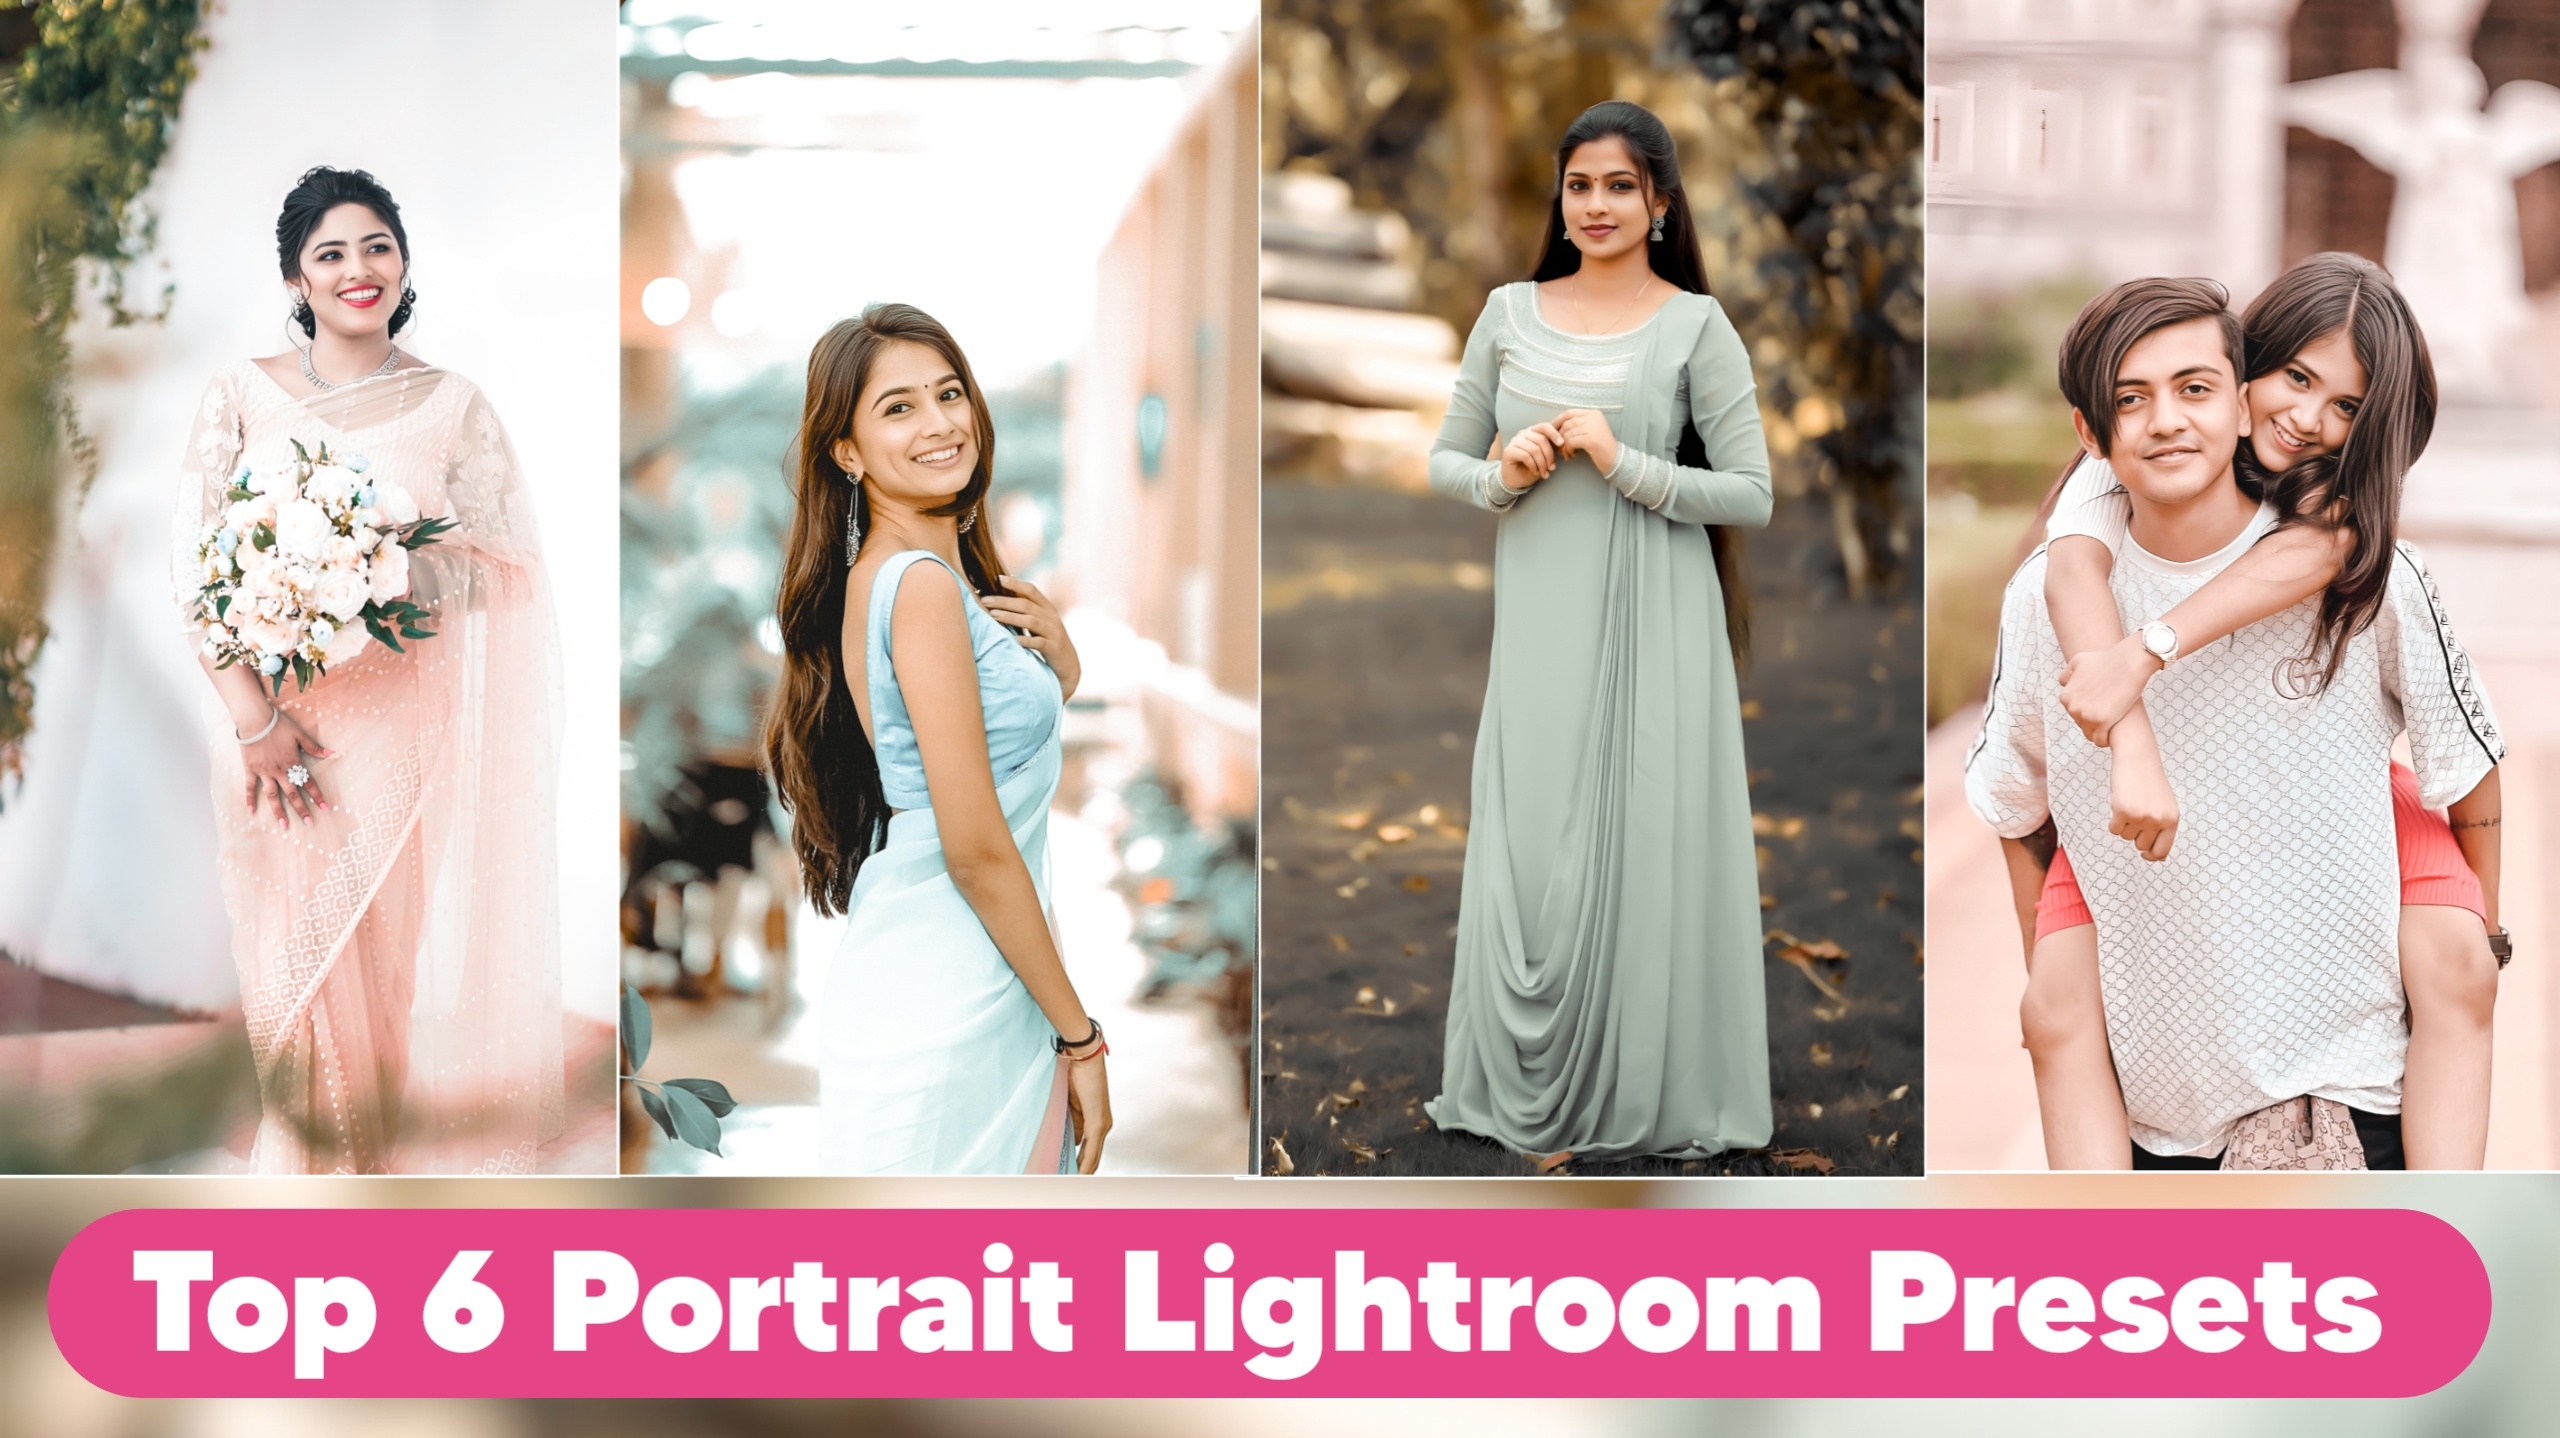 Top 6 Portrait Lightroom Presets